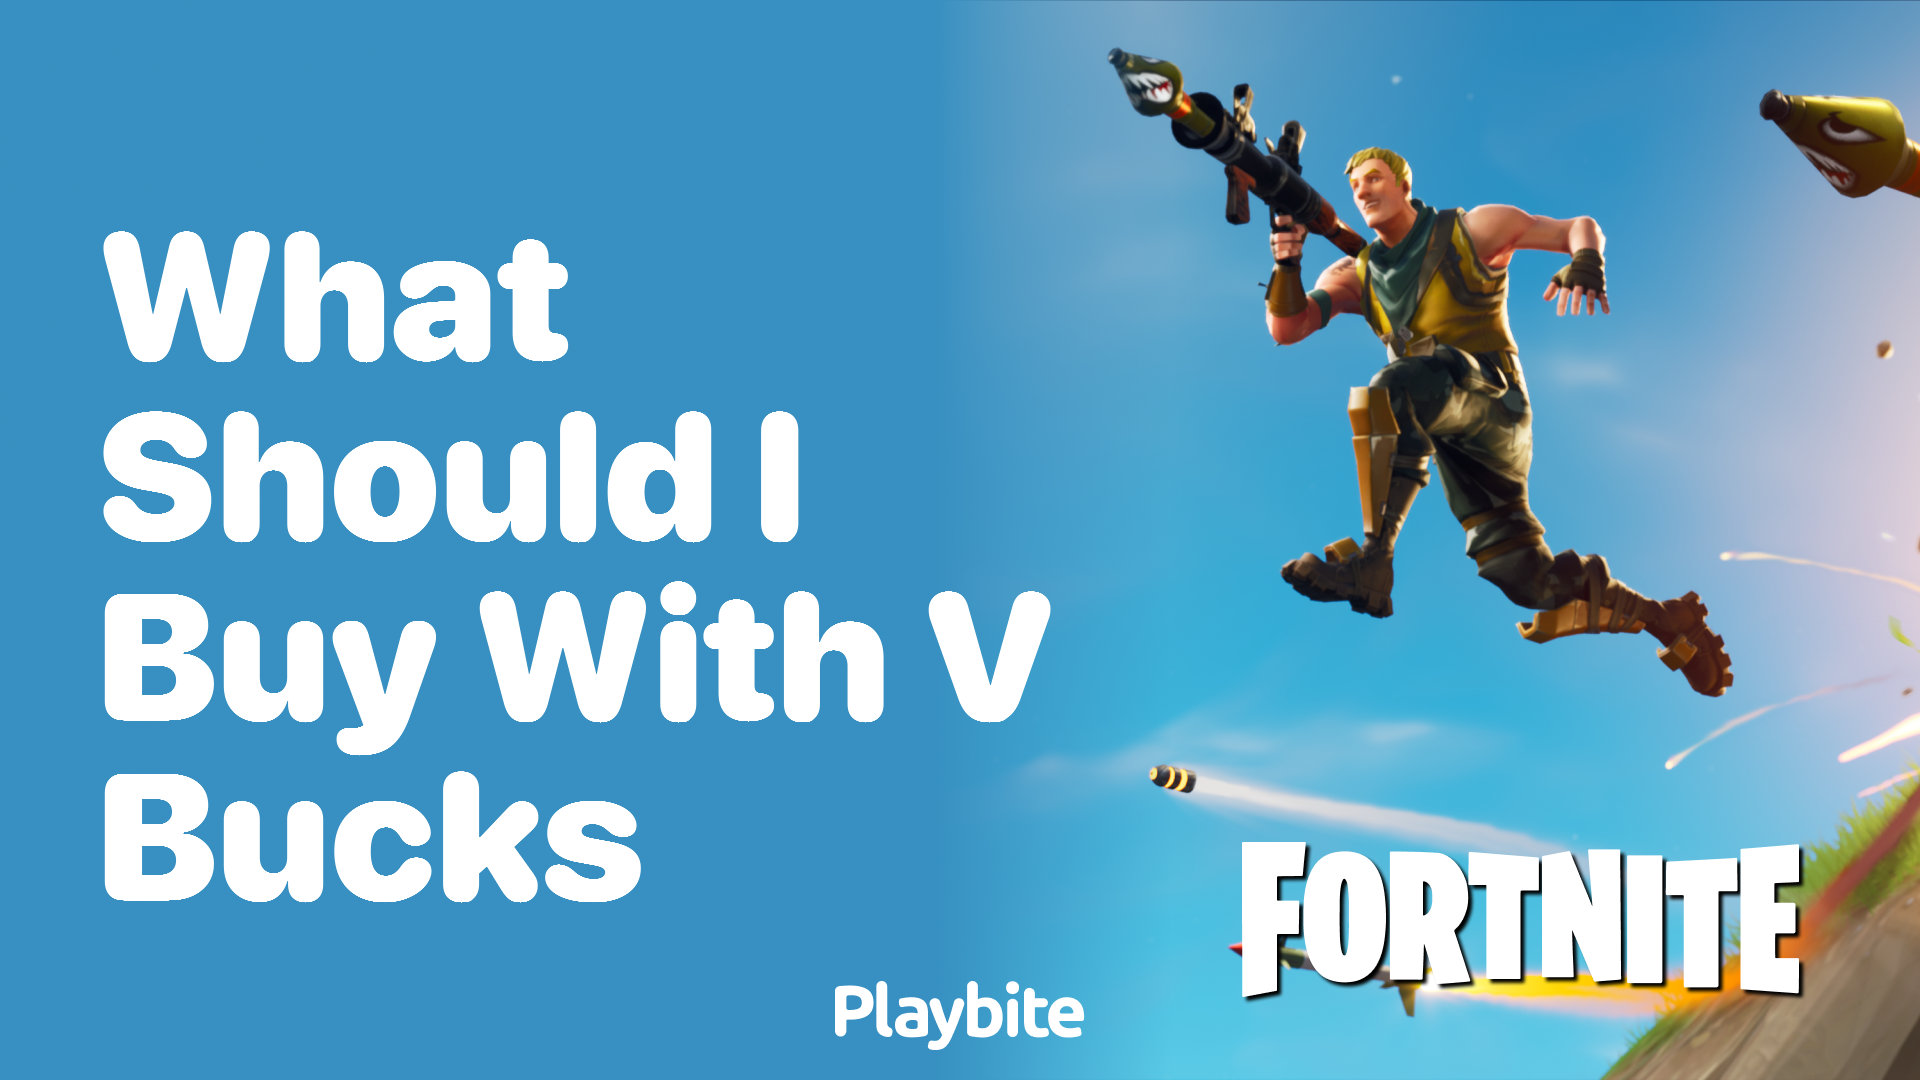 What Should I Buy with V-Bucks in Fortnite?